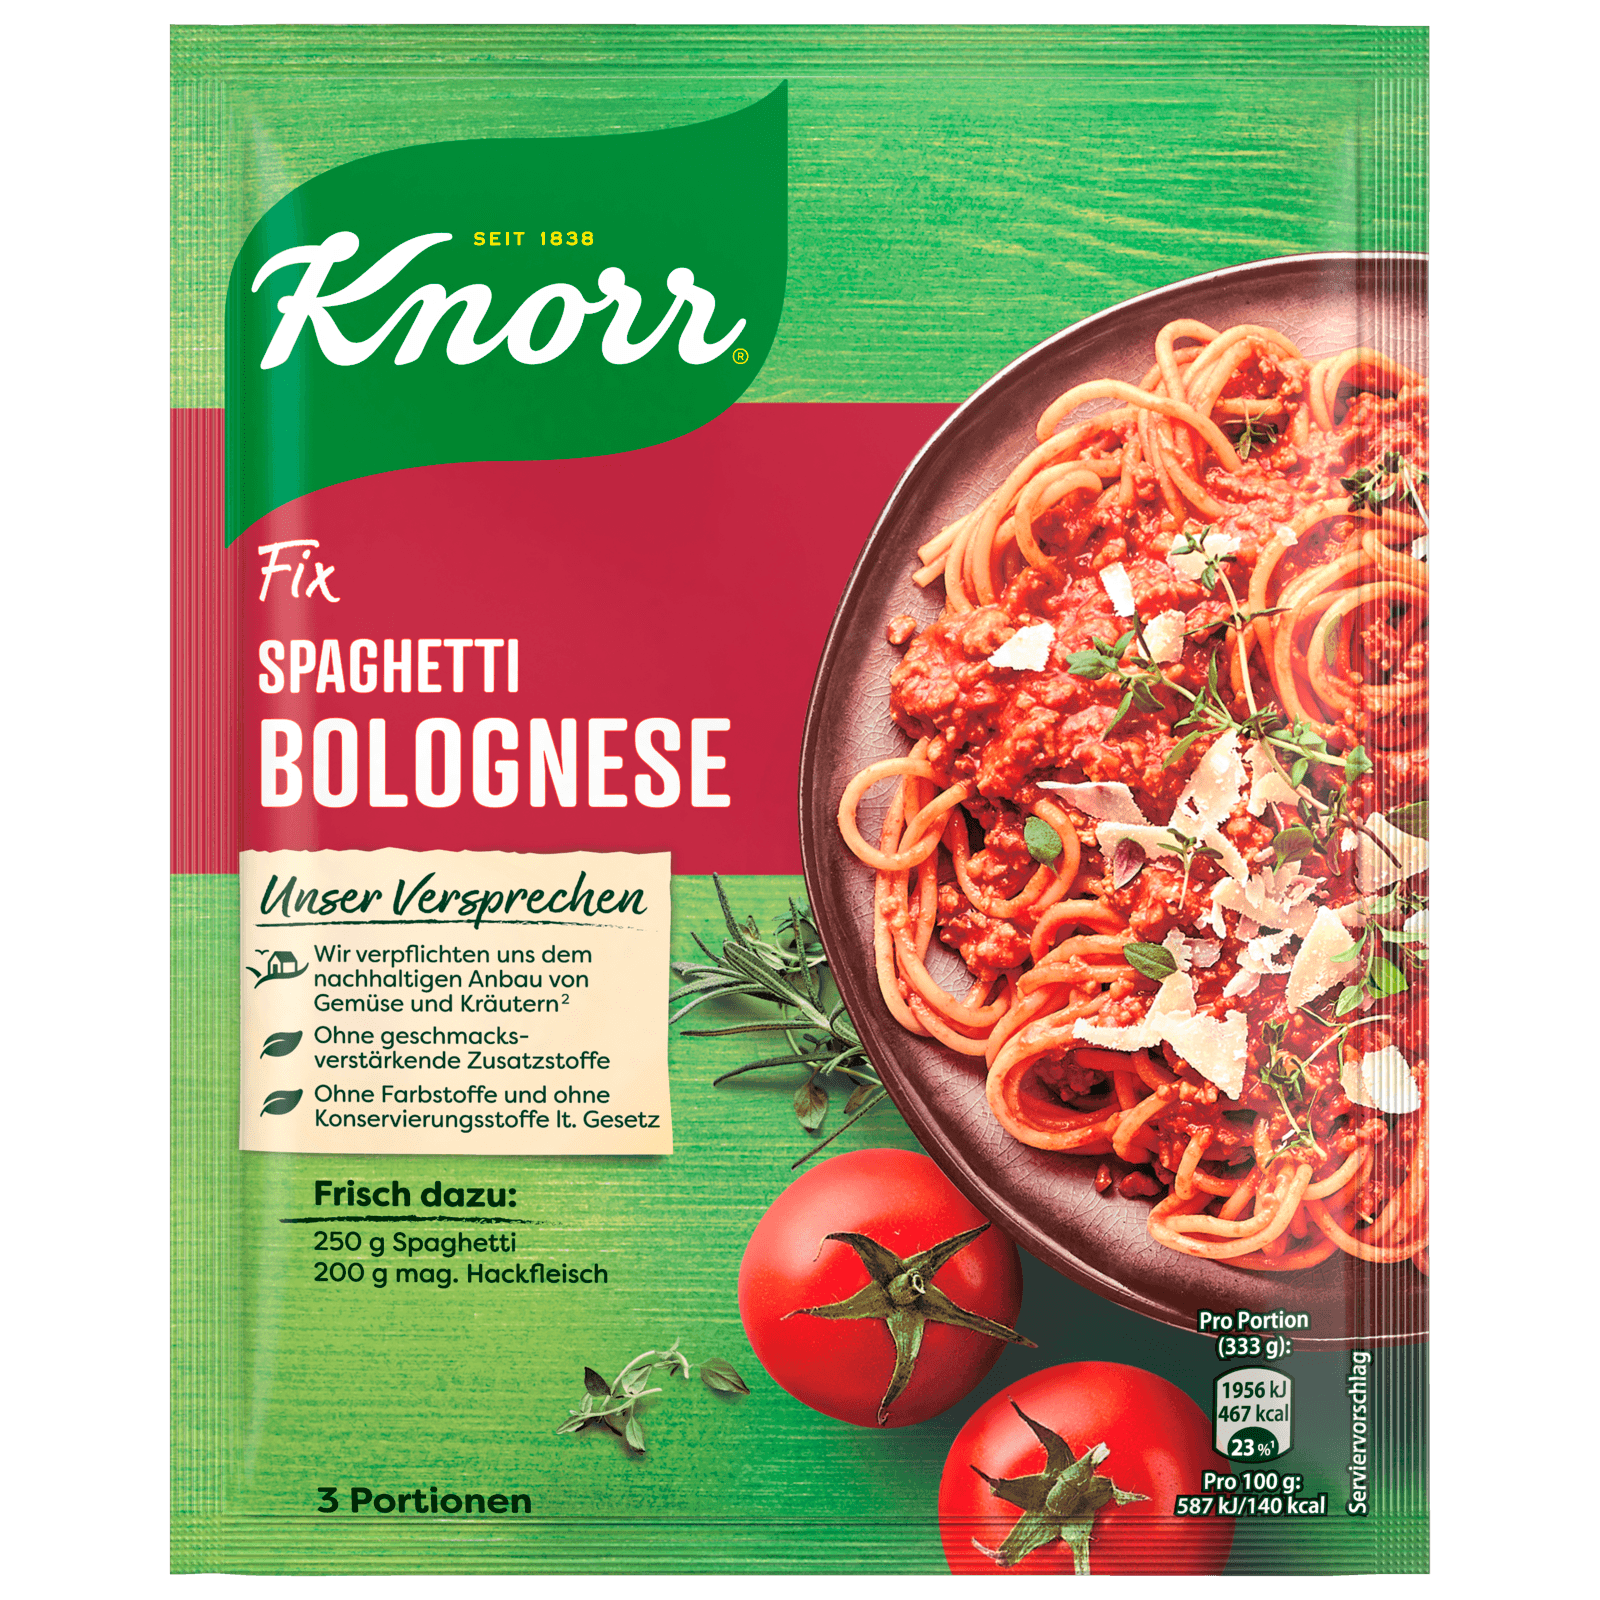 Knorr Fix Spaghetti Bolognese 38g Bei Rewe Online Bestellen